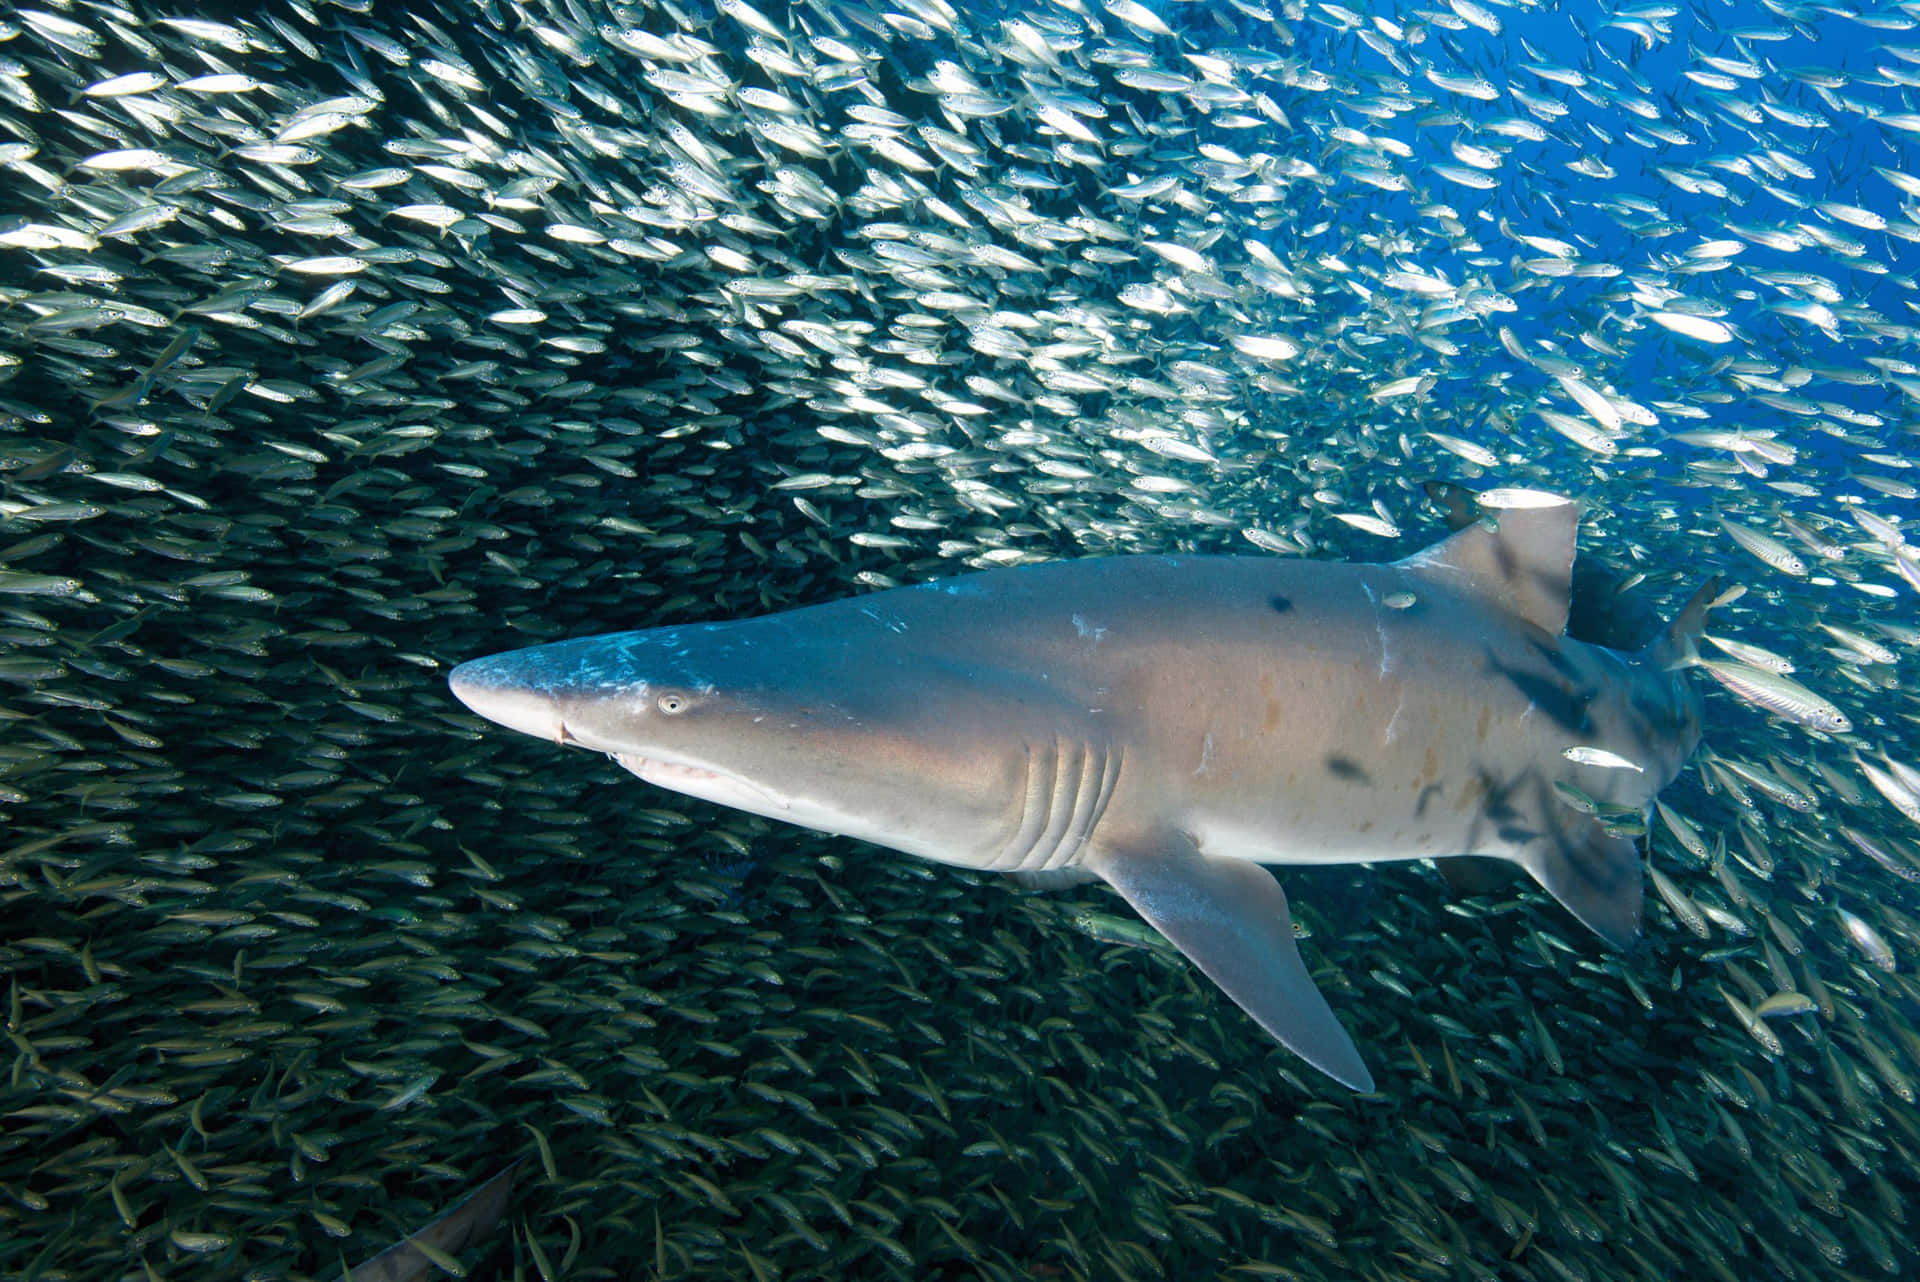 Sand Shark Swimming Among Schoolof Fish Wallpaper